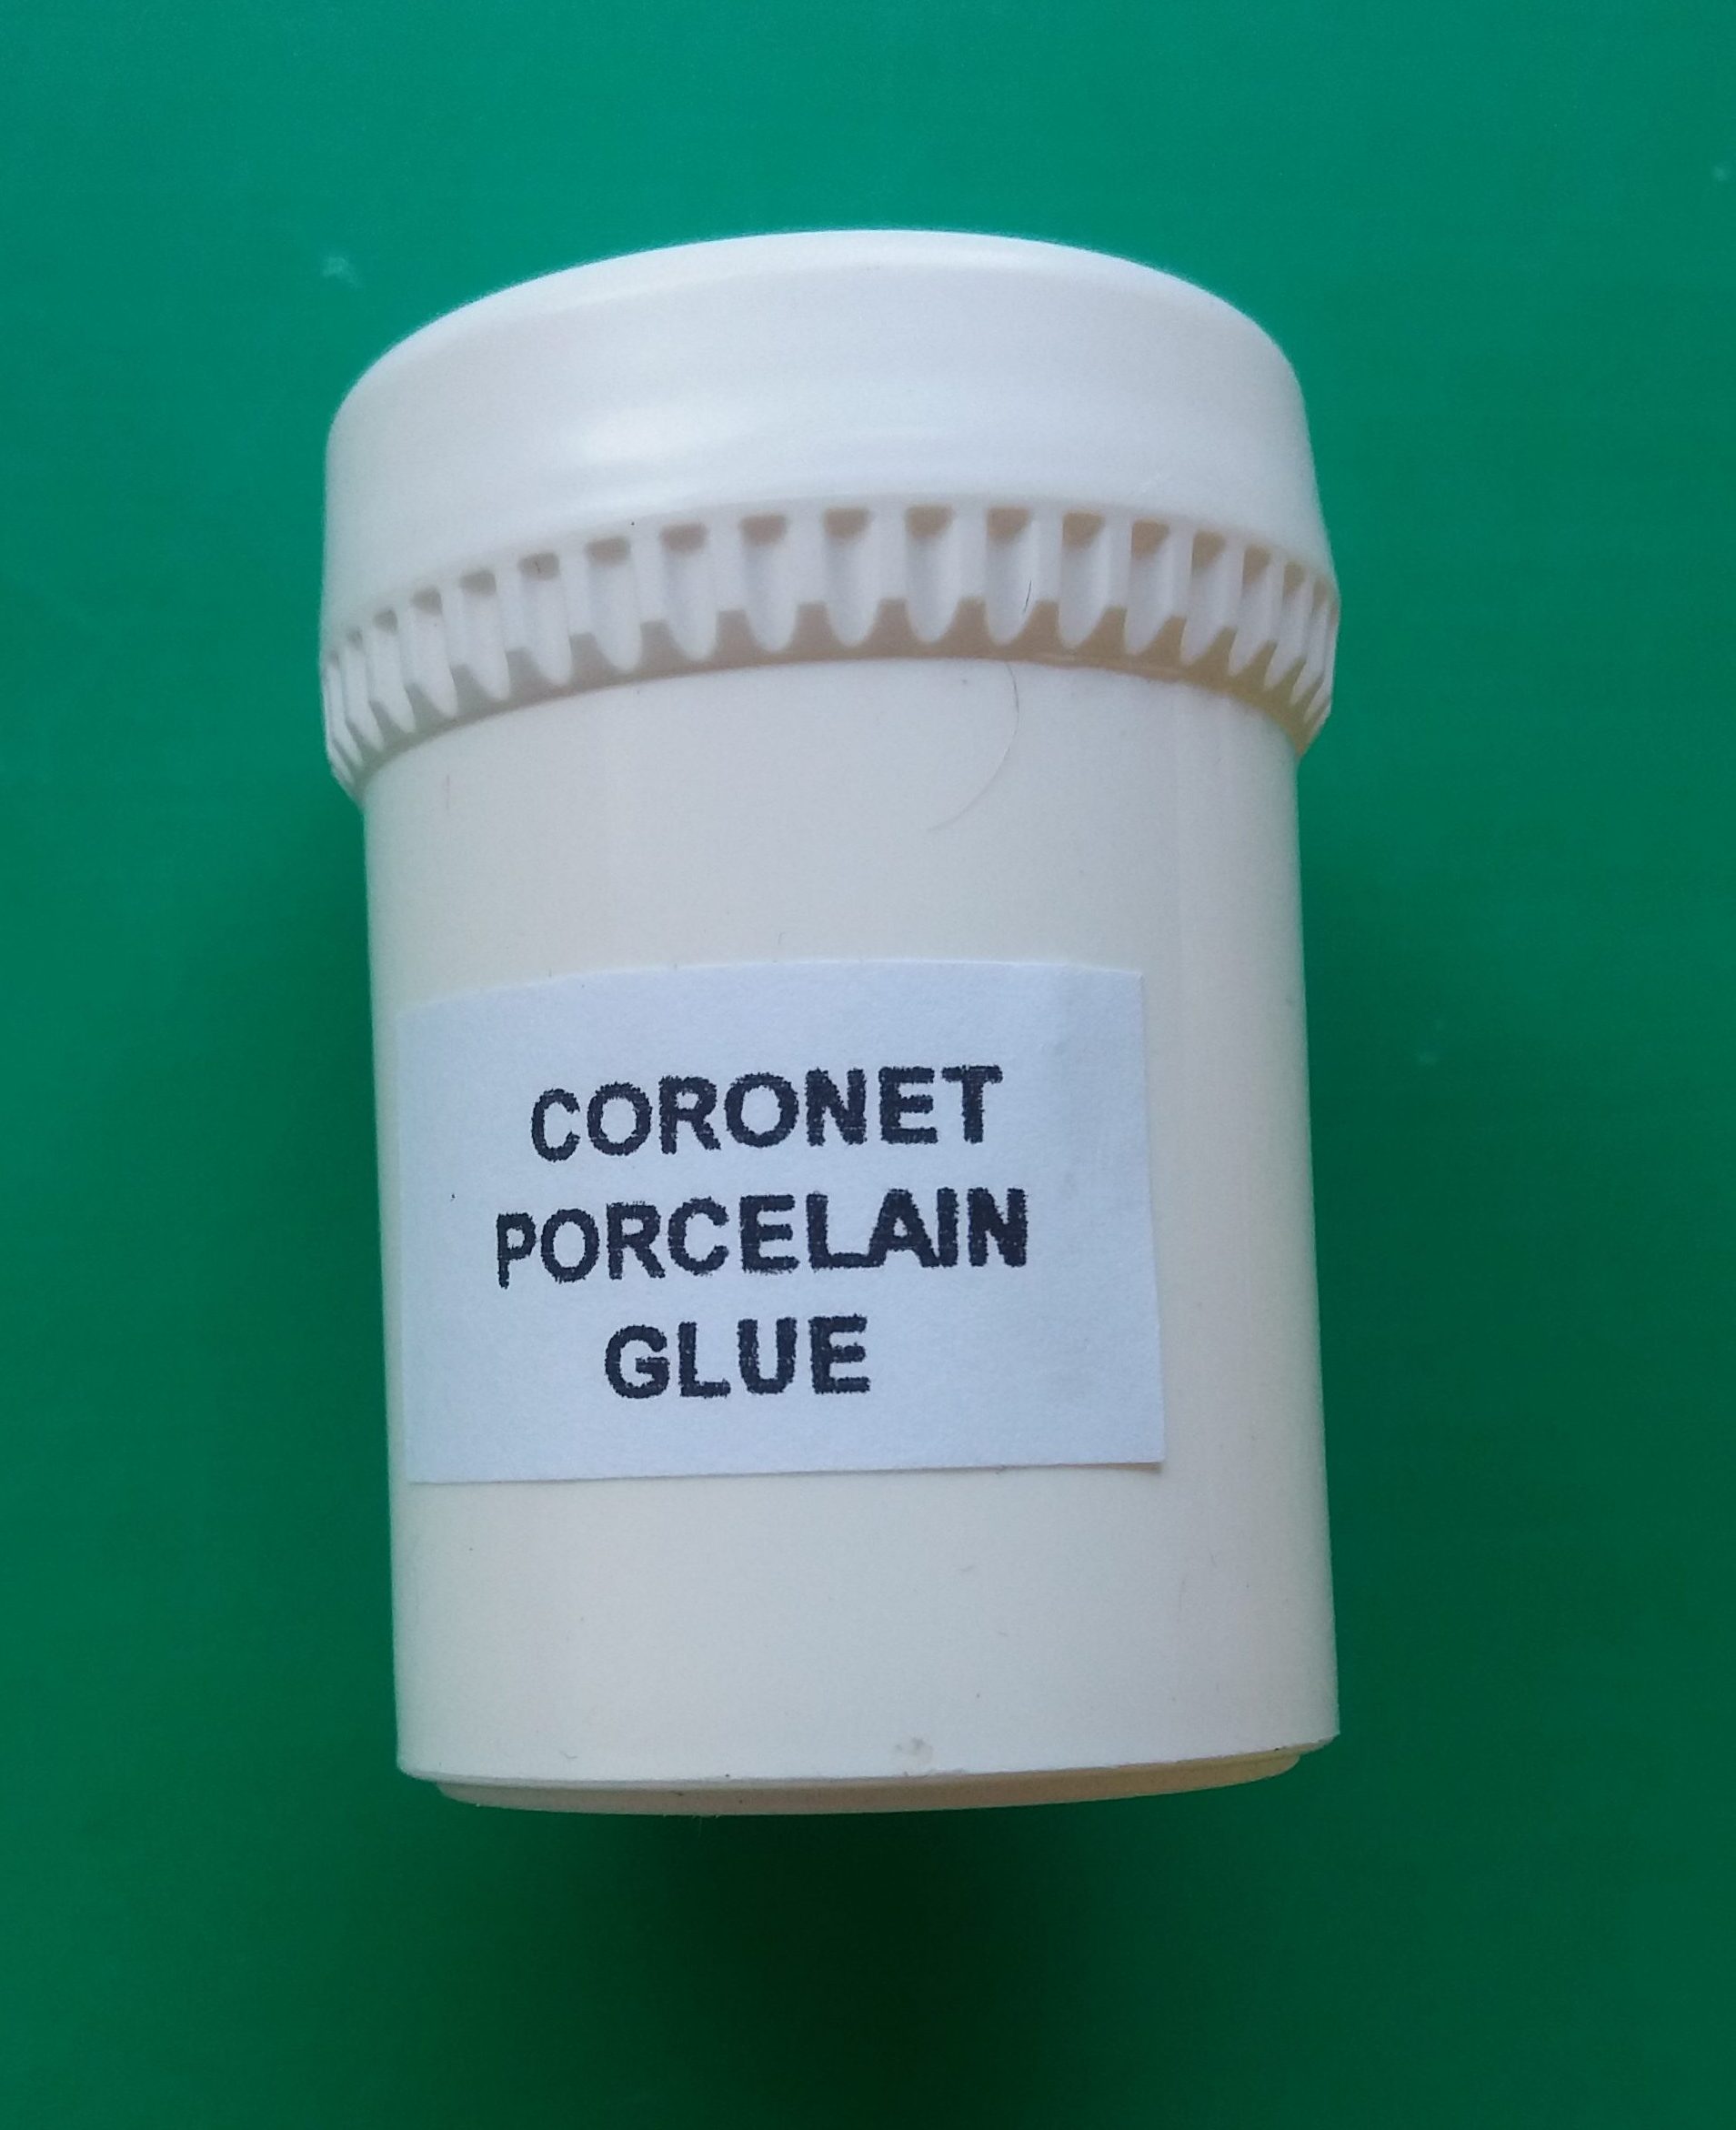 Coronet Porcelain Glue - Coronet Porcelain